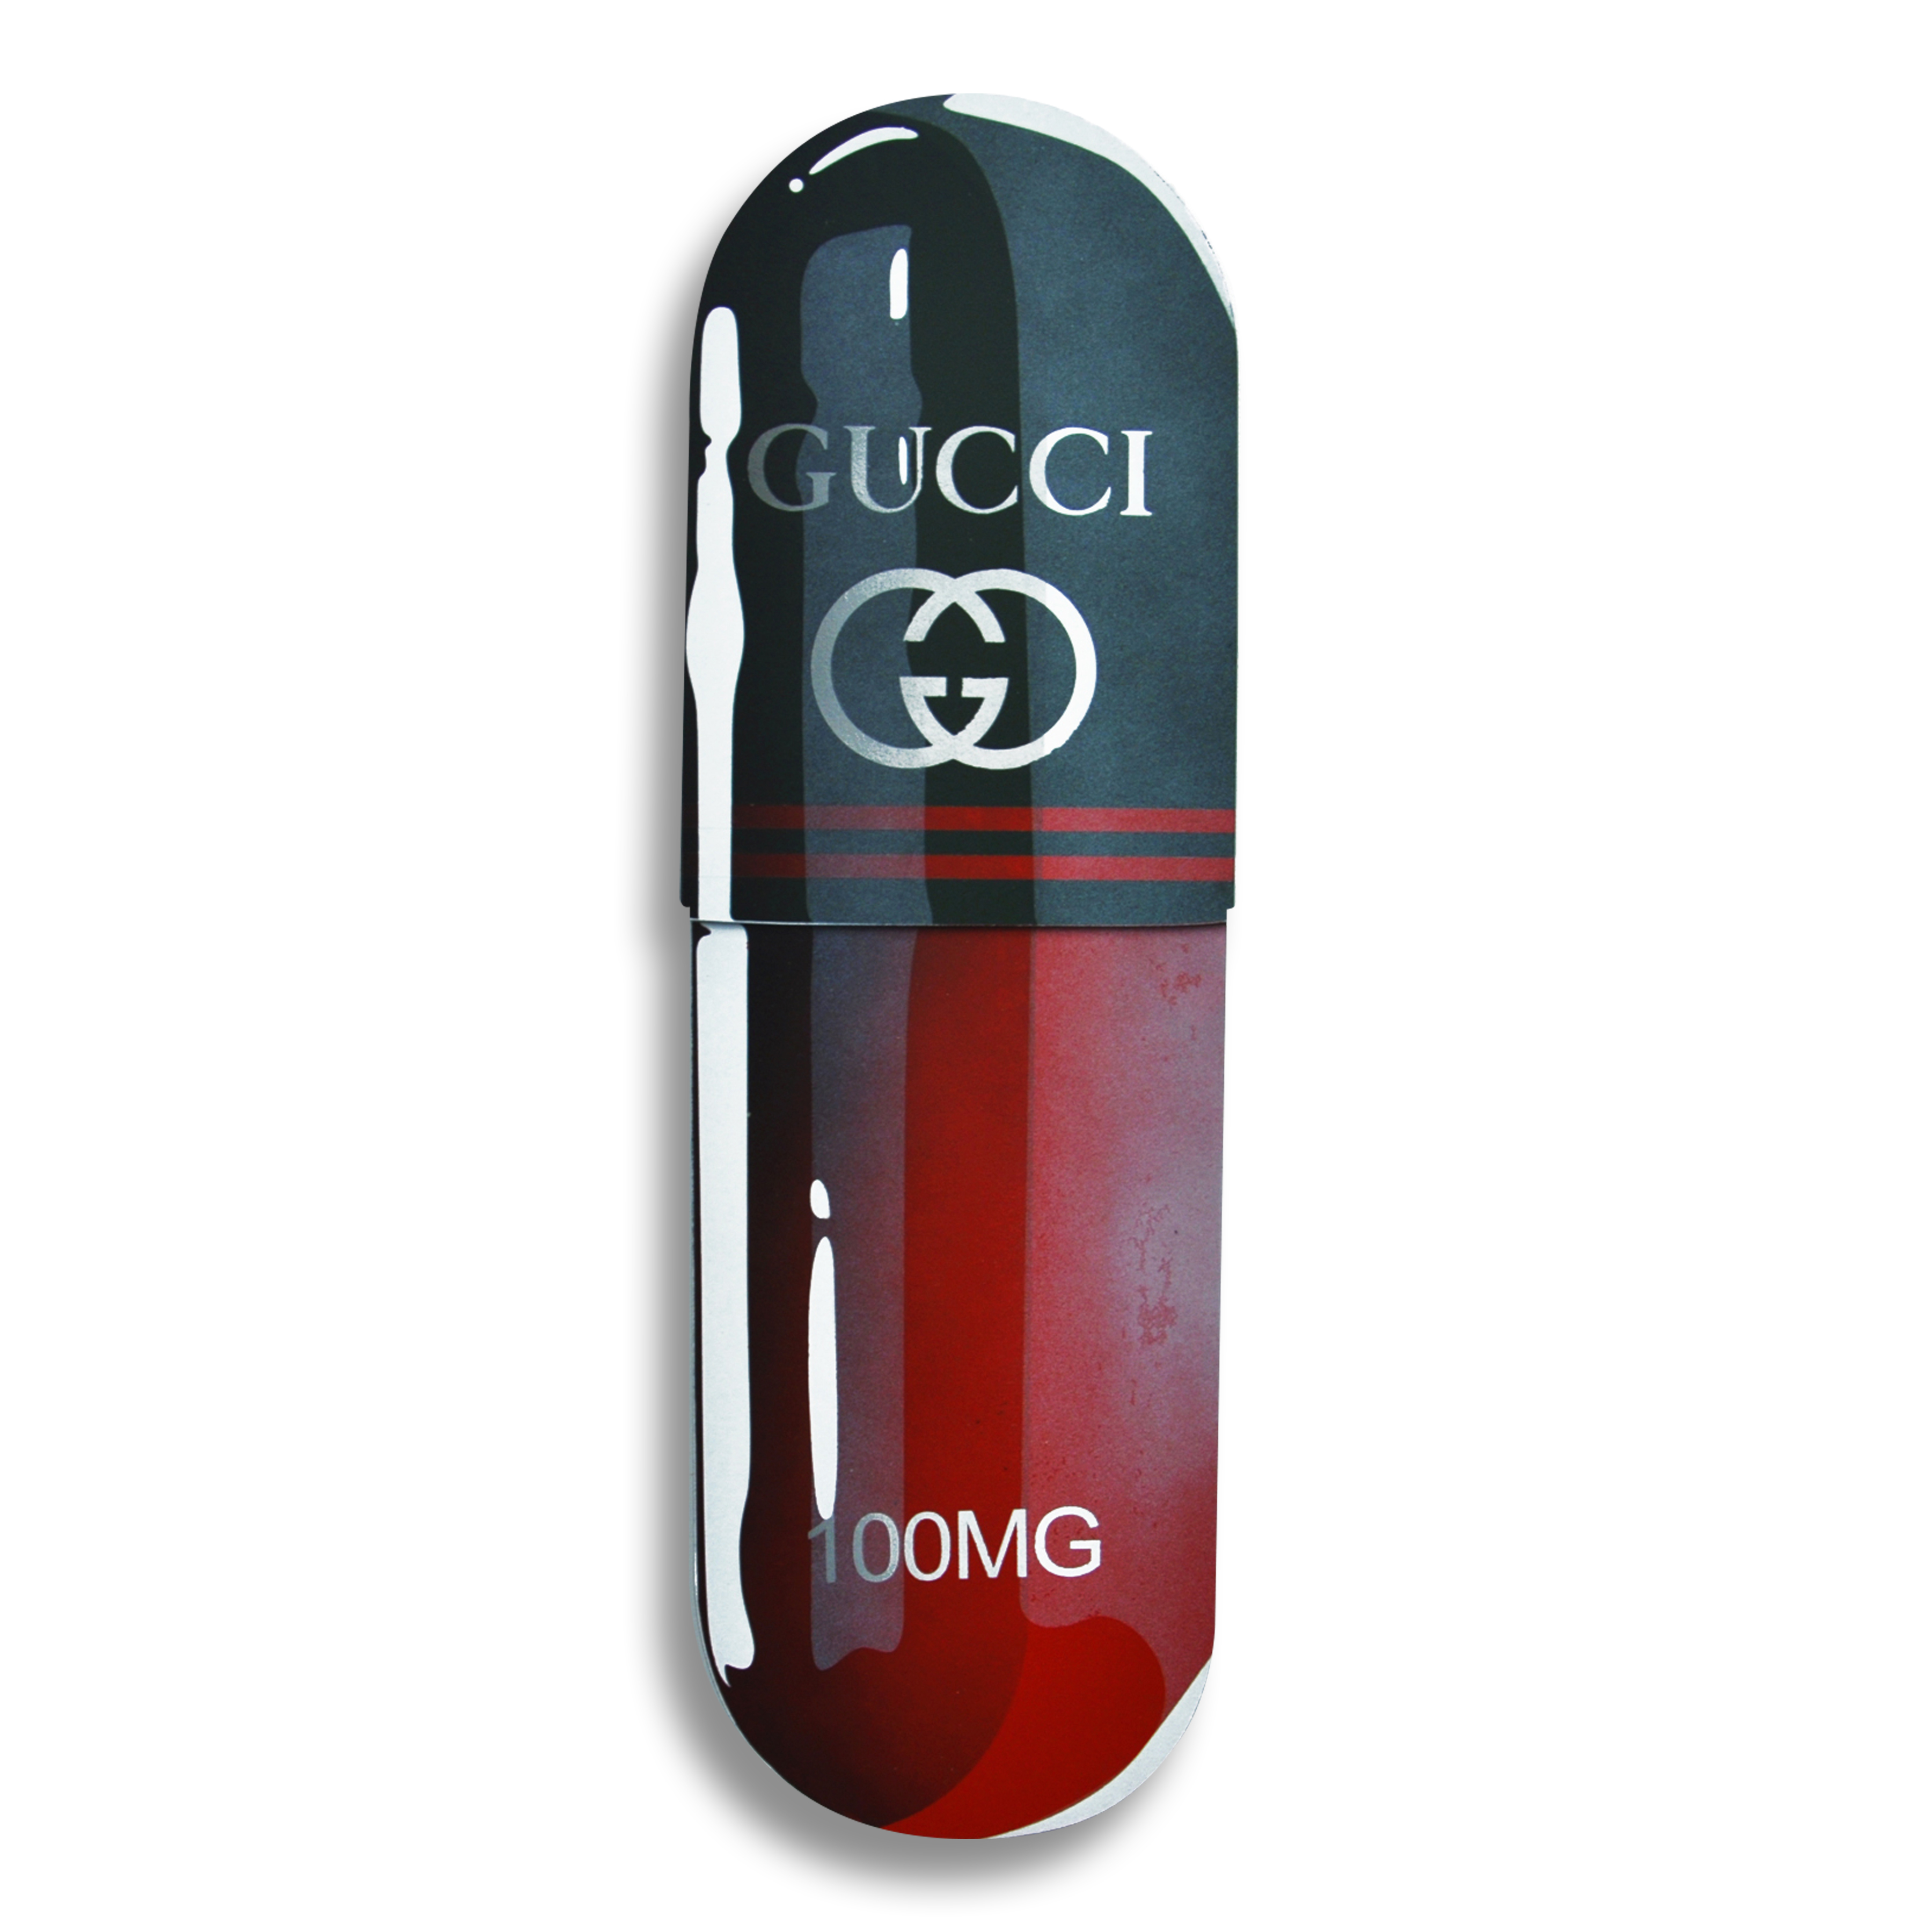 Blue gucci pill